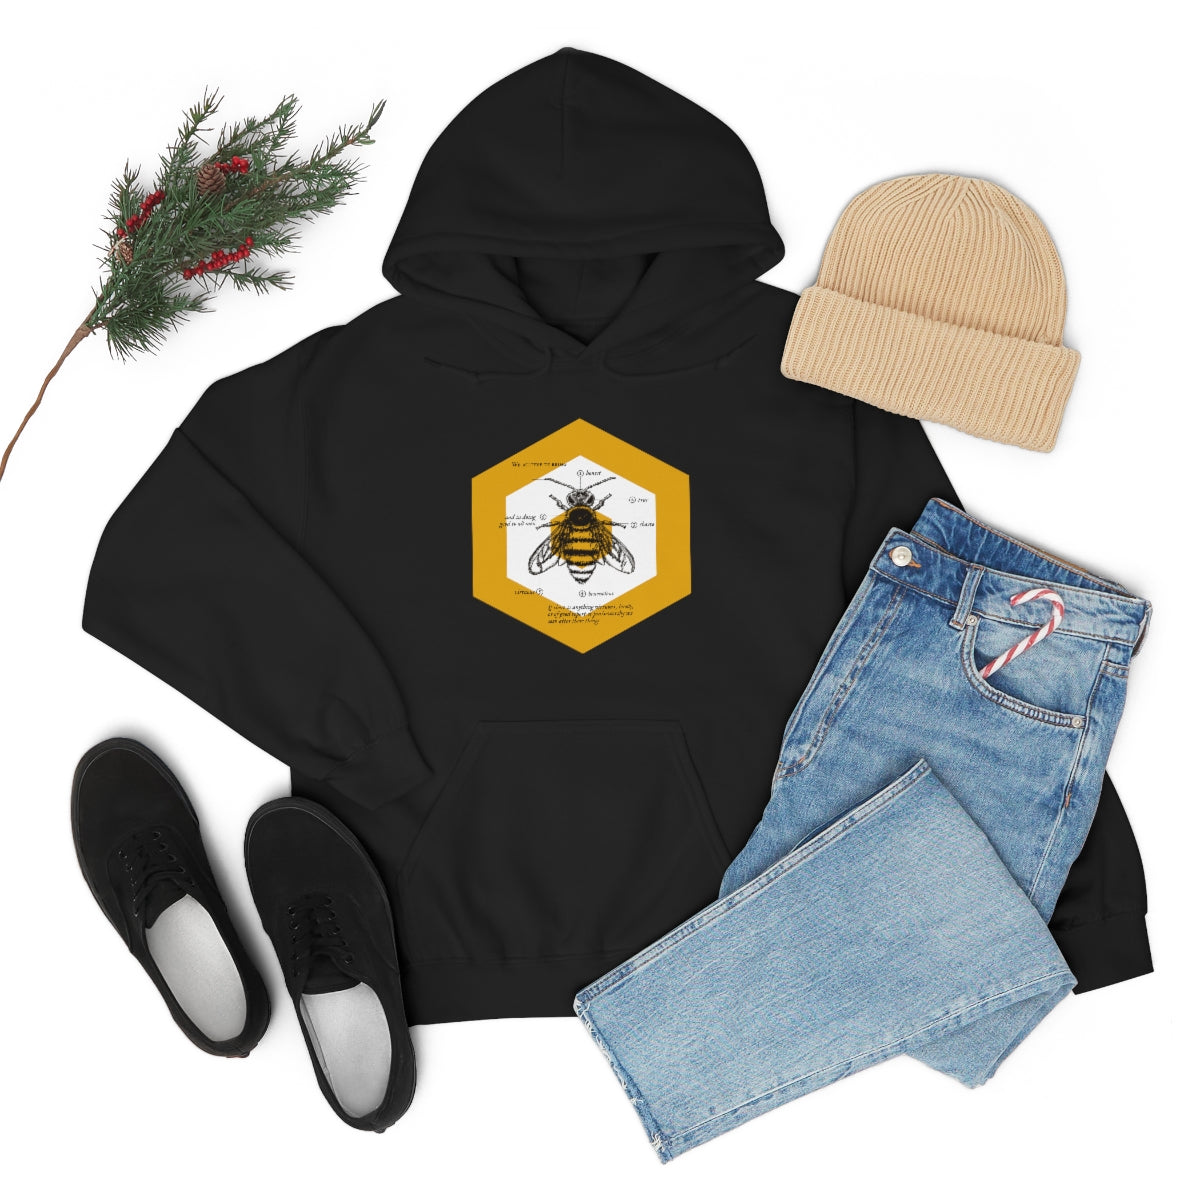 LDS Honey Bee Hoodie - We Believe, Articles of Faith Hooded Sweatshirt